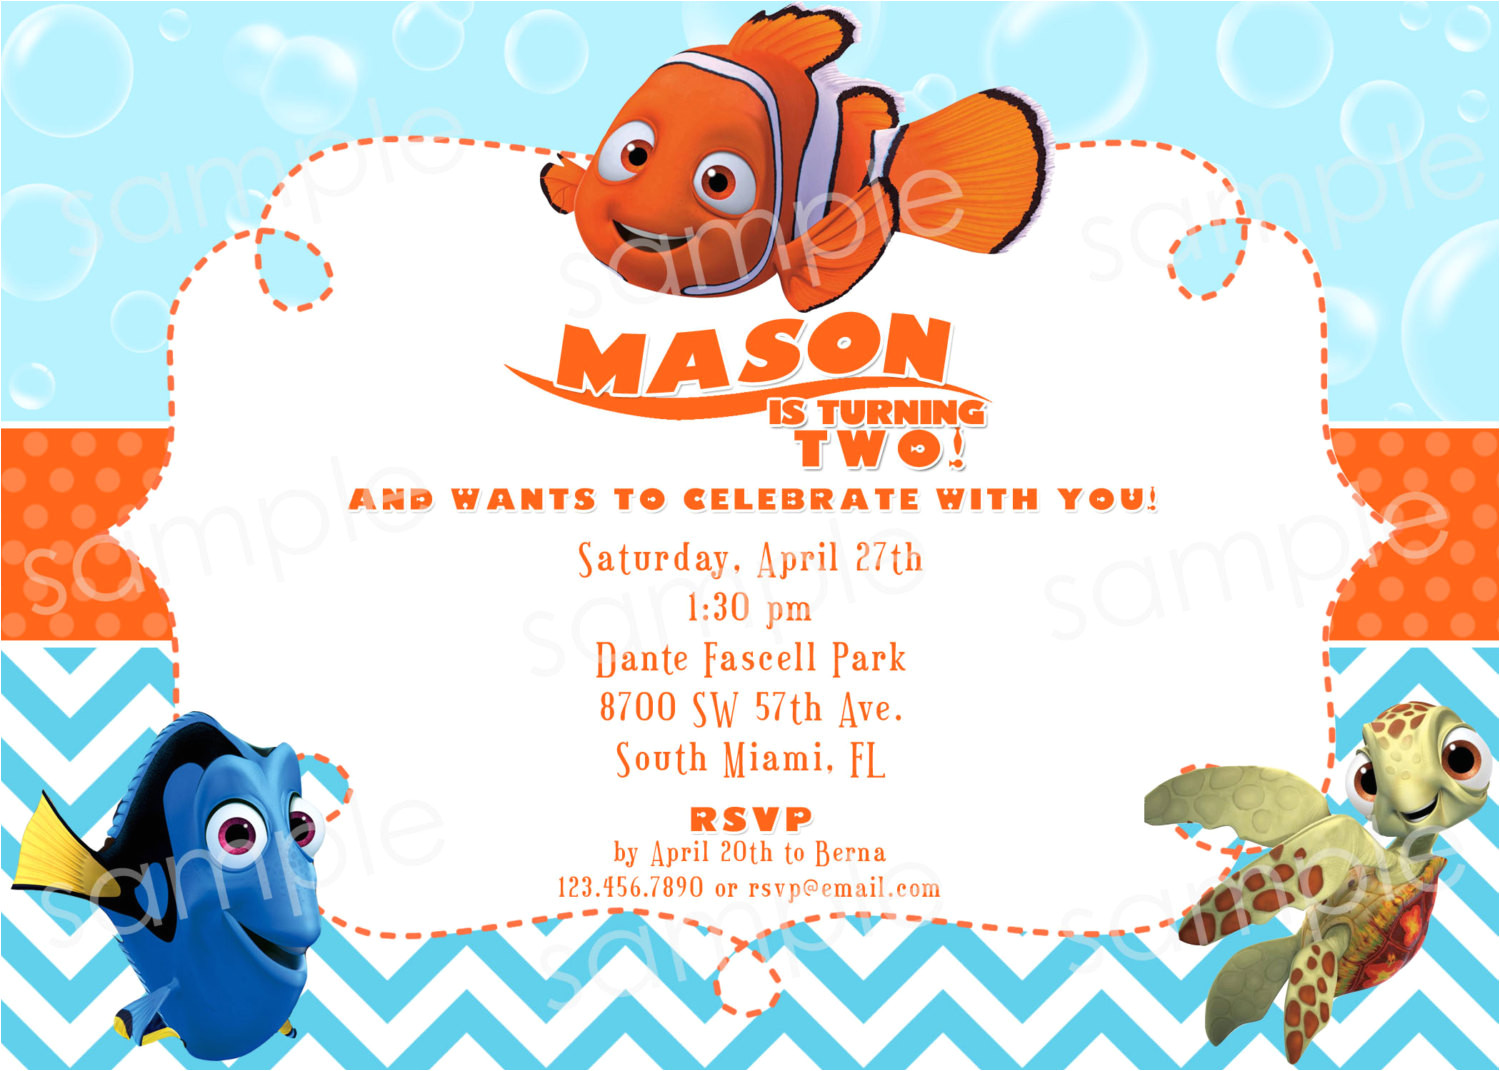 Nemo Party Invitation Template Finding Nemo Birthday Invitation Diy Digital by Modpoddesigns